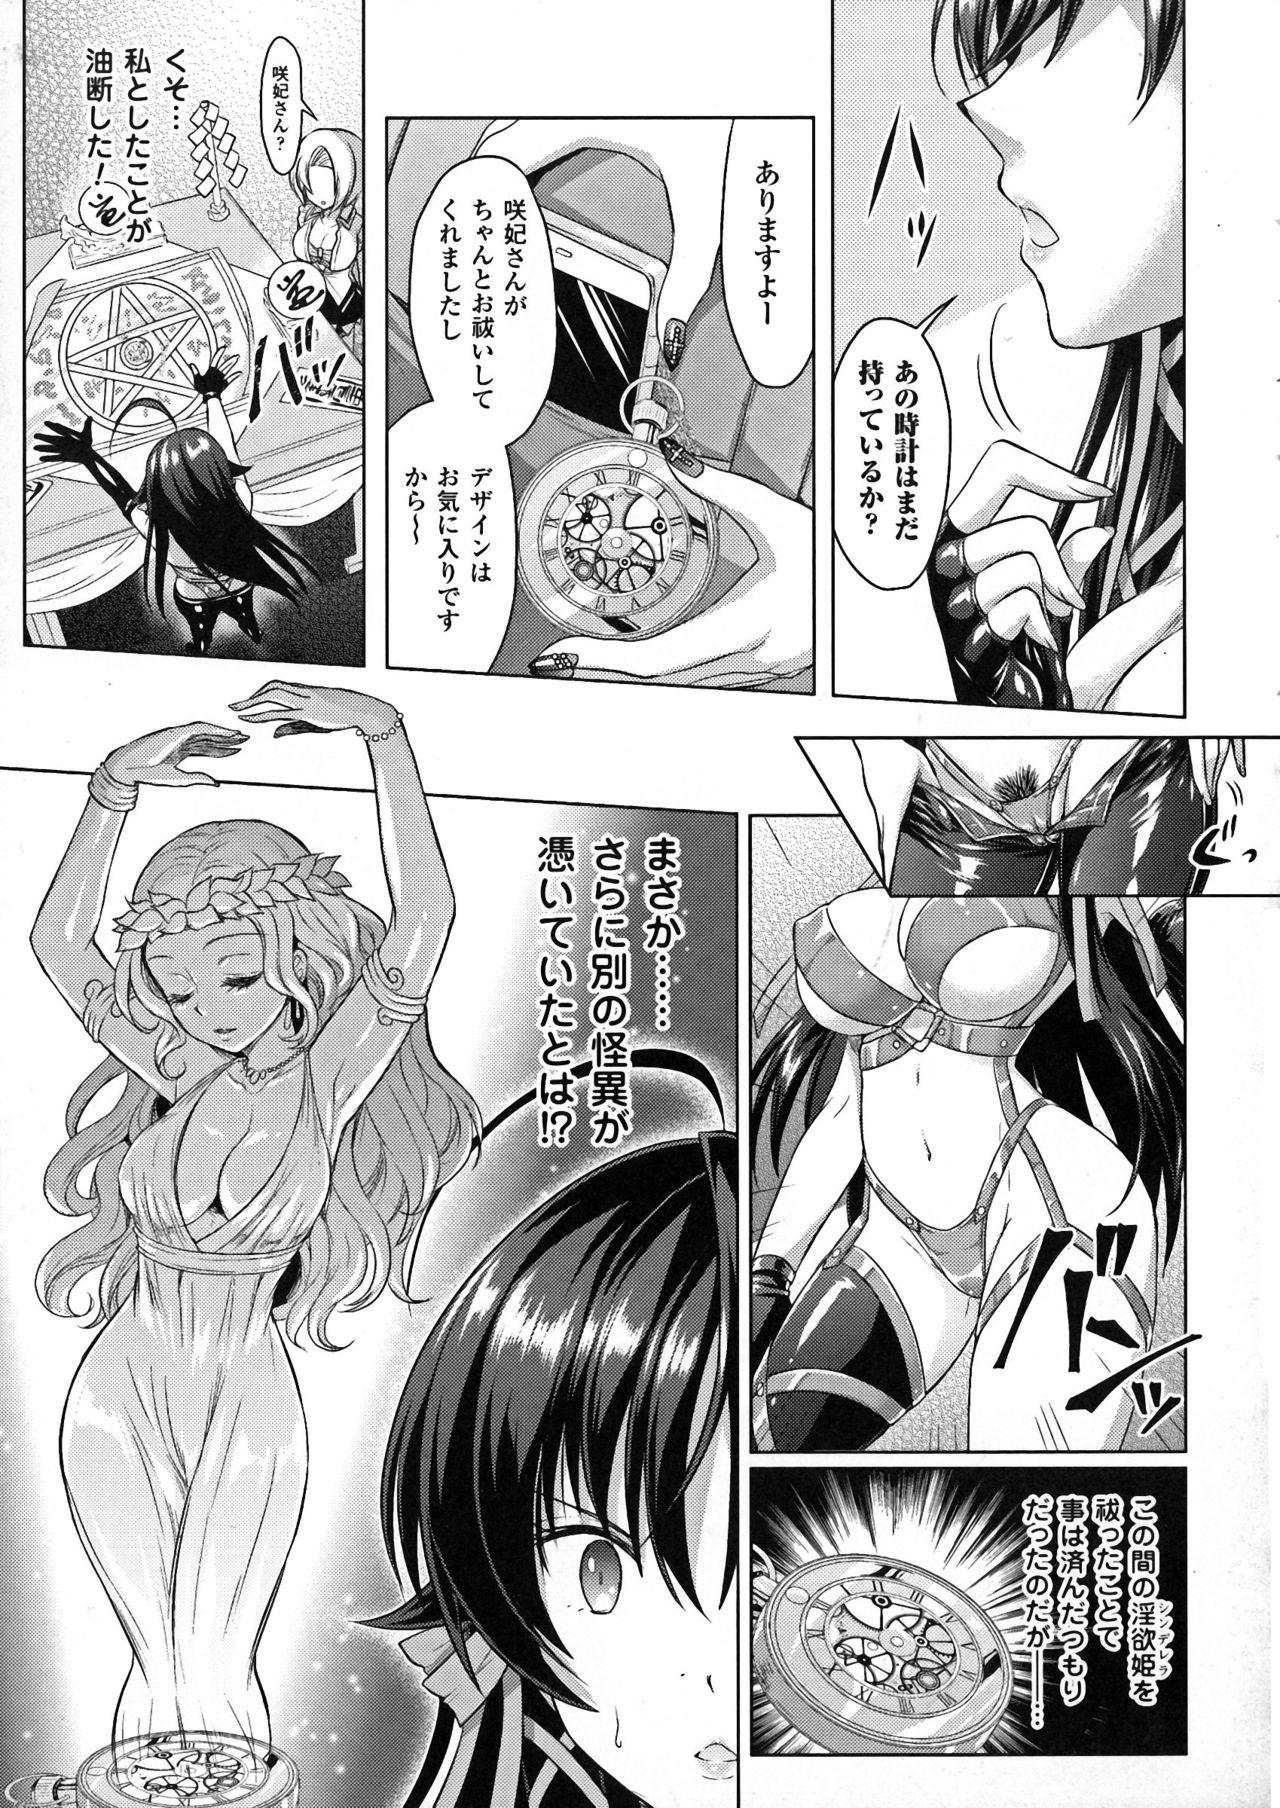 Seigi no Heroine Kangoku File DX Vol. 7 102